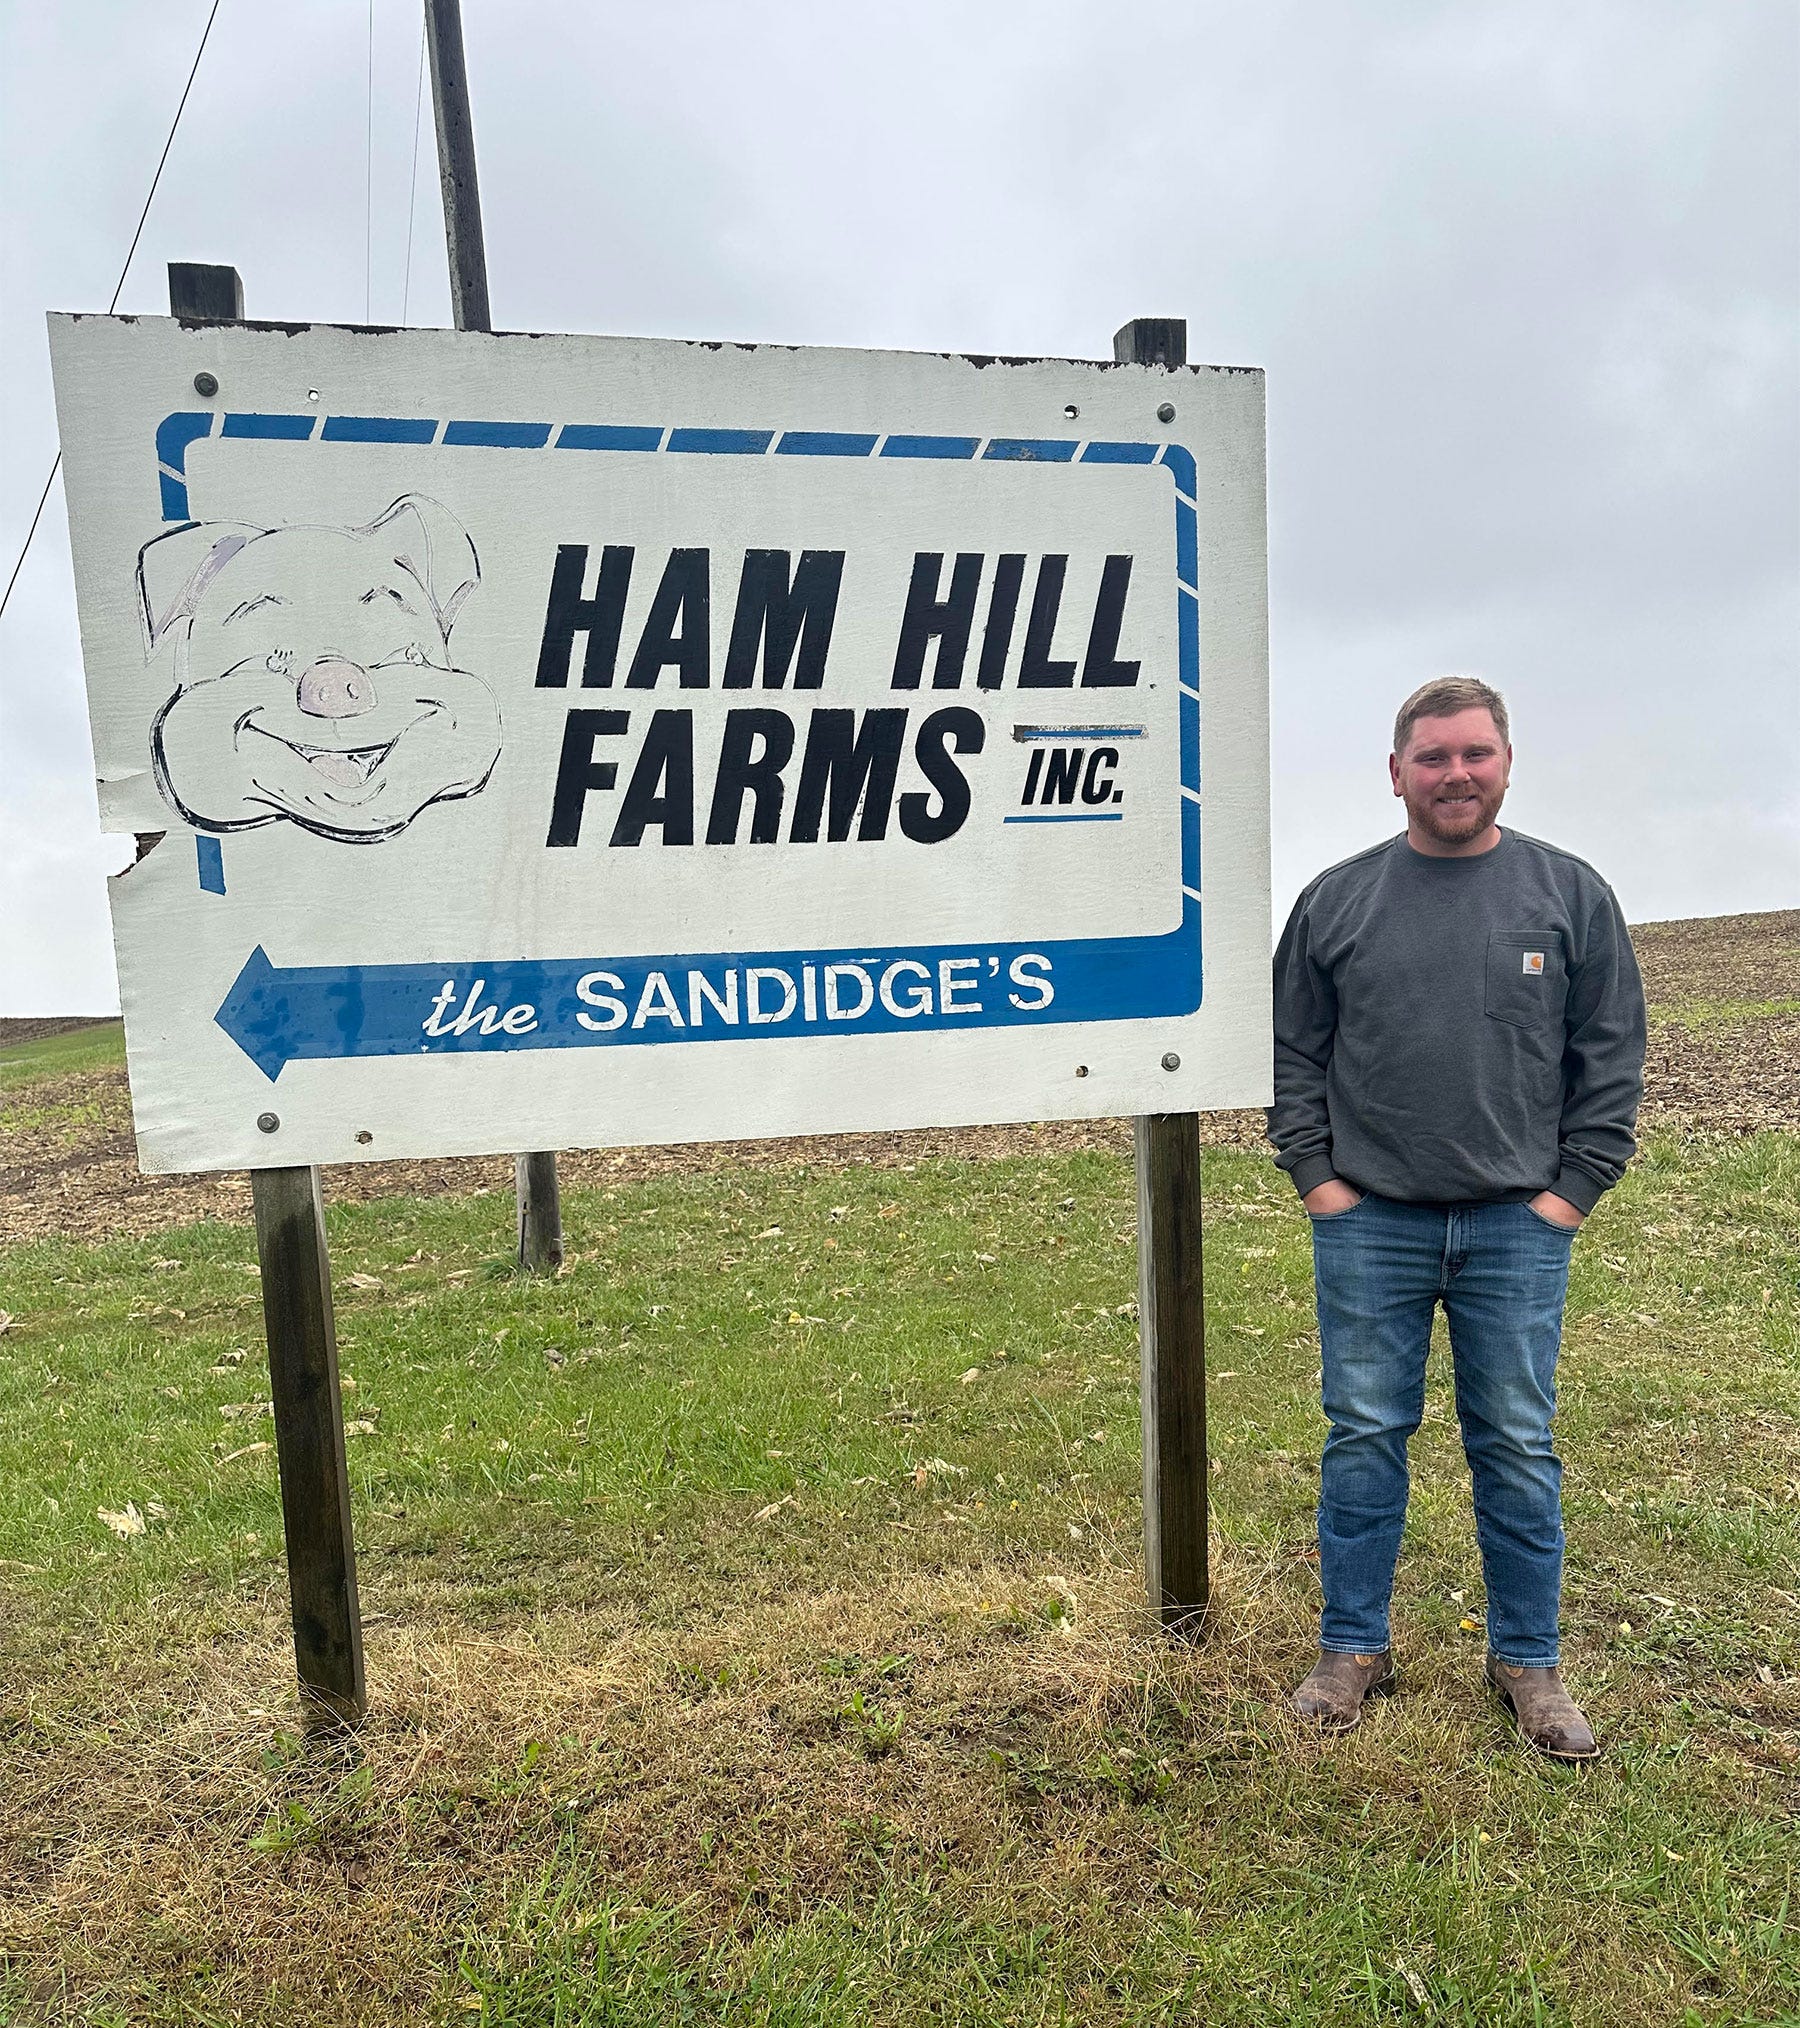 Missouri Farmers Care - Mason Sandidge standing next to a sign for Ham Hill Farms, Inc.